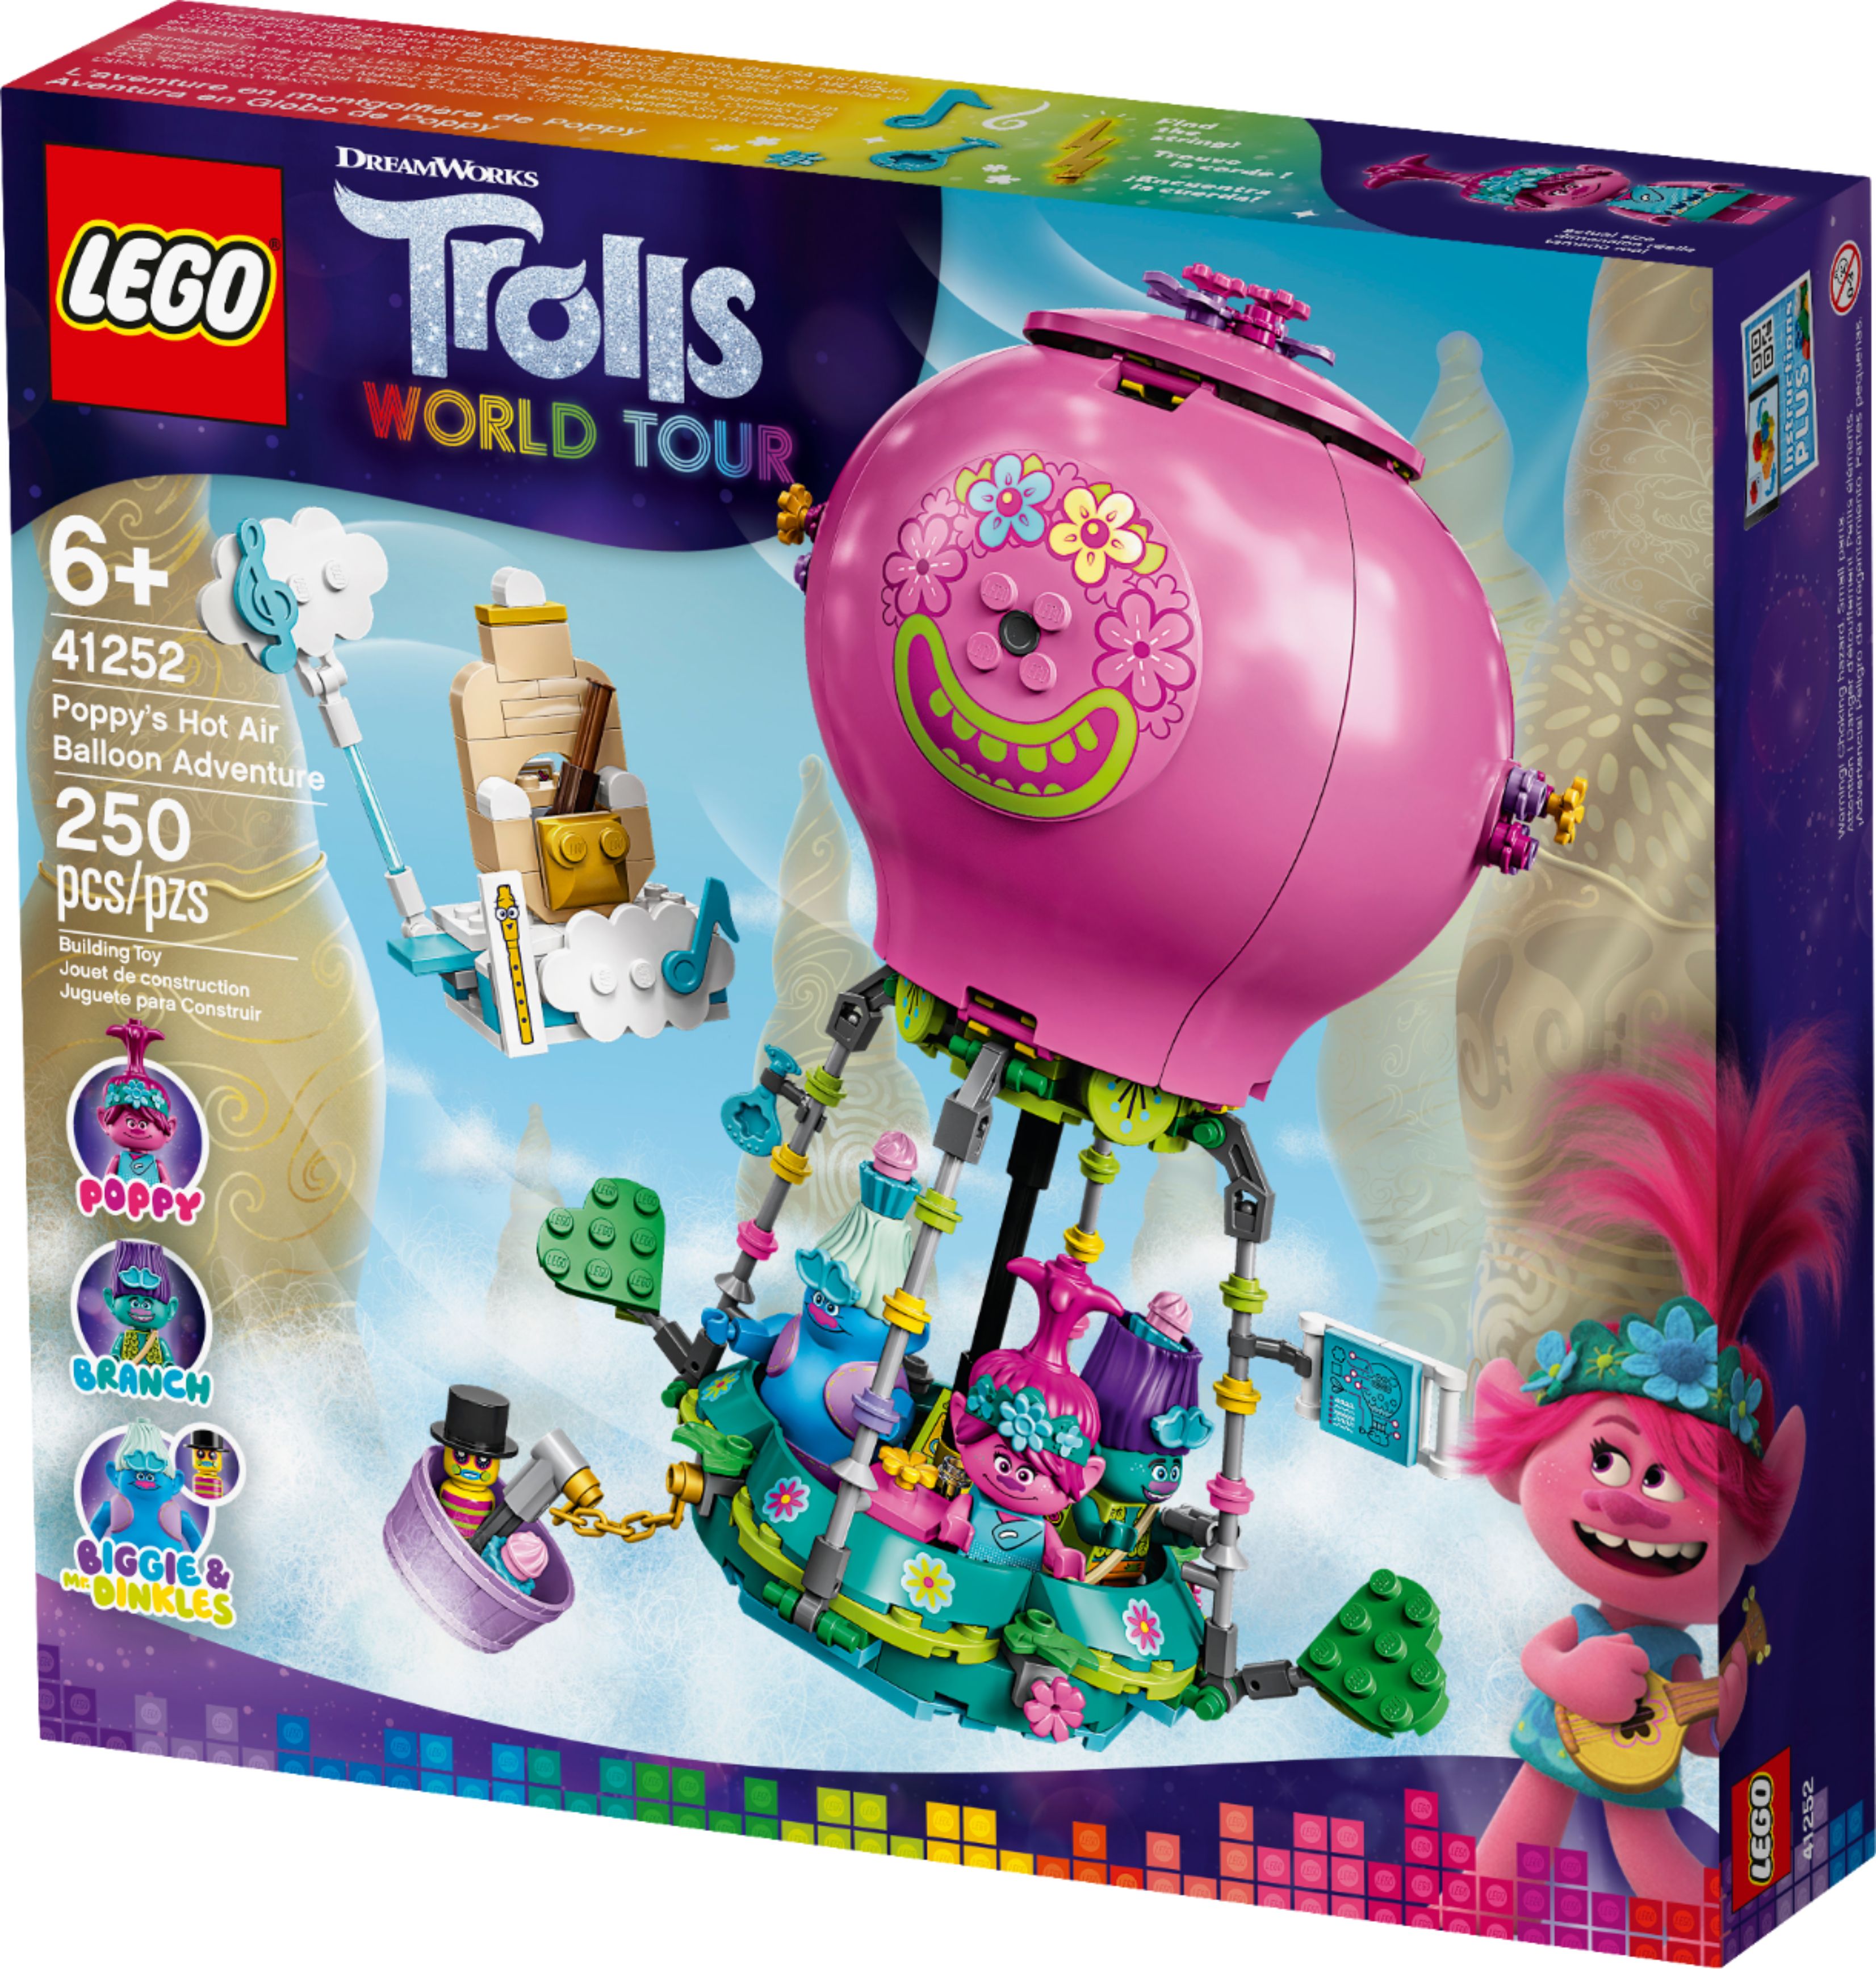 New LEGO Trolls World Tour 41252 Poppy’s Hot Air Balloon